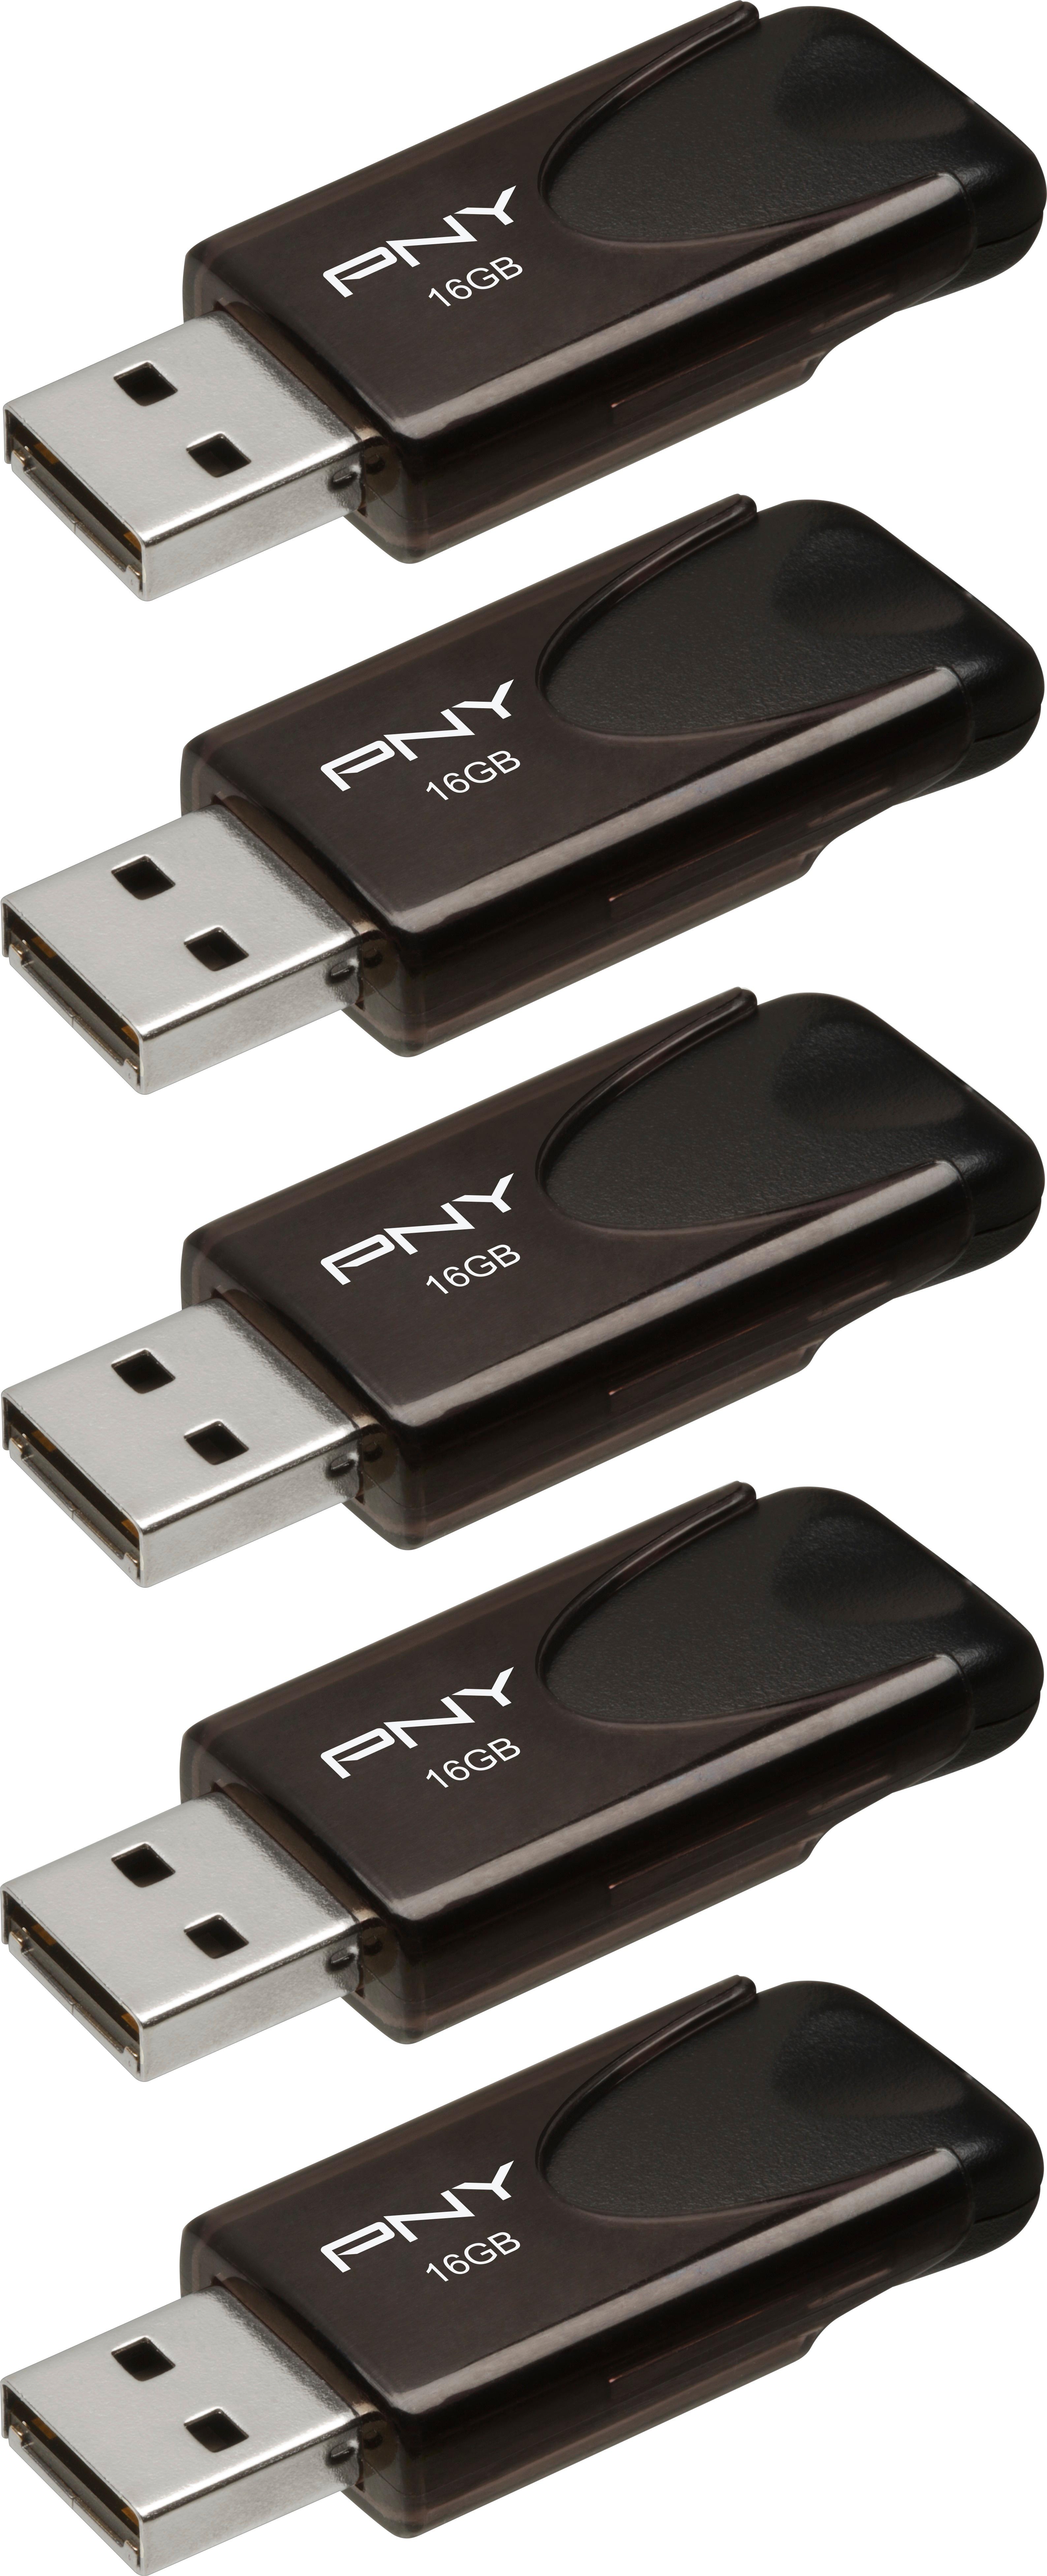 PNY 16GB Attaché 4 A 2.0 Flash Drive 5-Pack Black - Best Buy